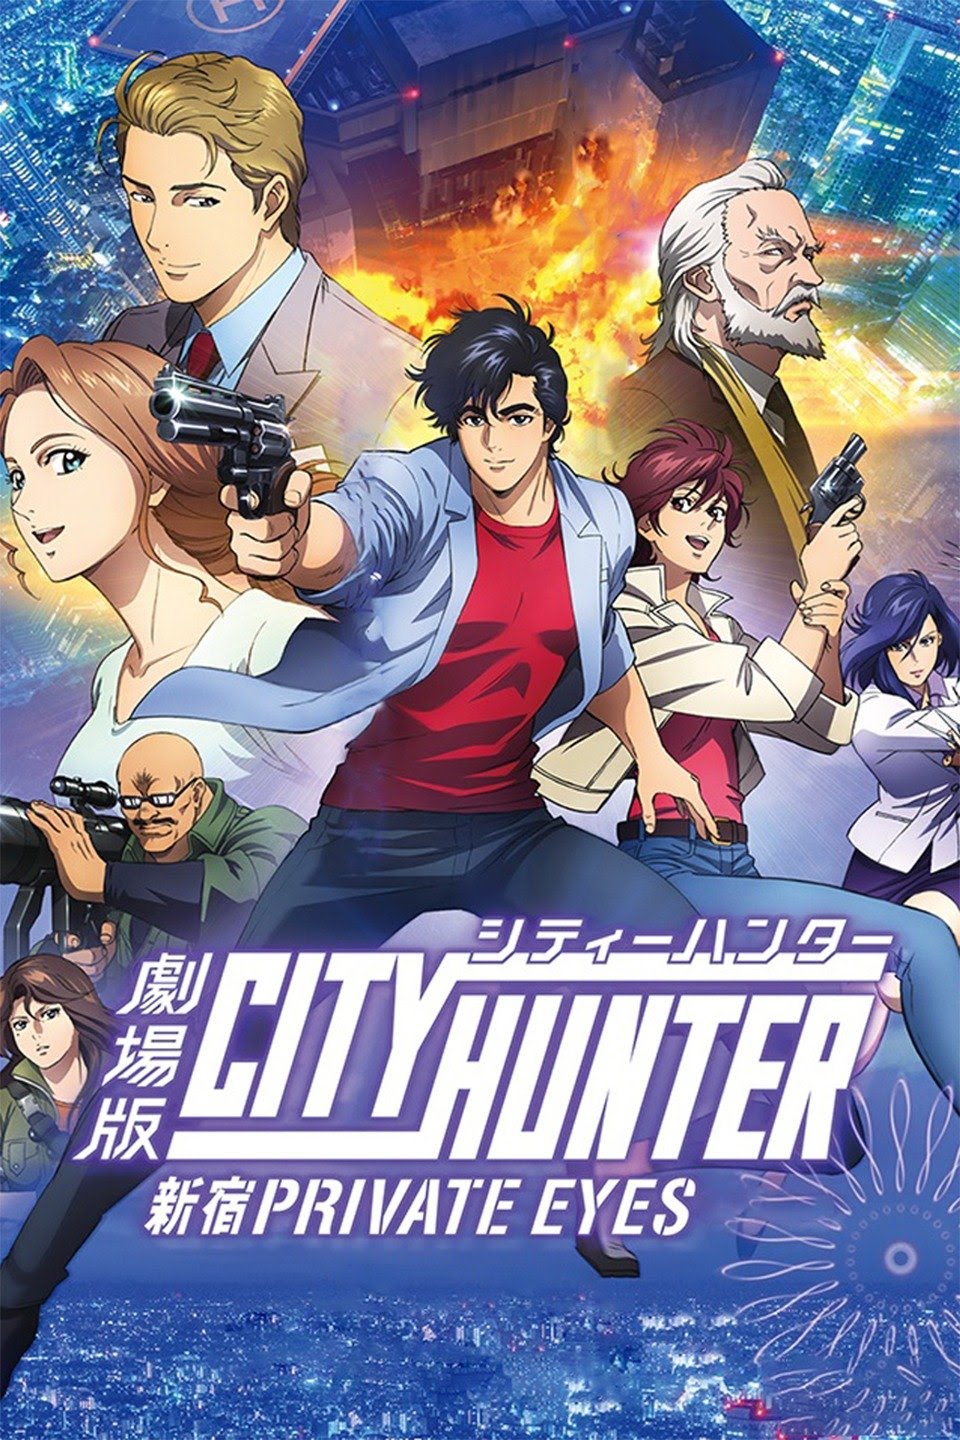 [MINI Super-HQ] City Hunter: Shinjuku Private Eyes (2019) ซิตี้ฮันเตอร์ โคตรนักสืบชินจูกุ “บี๊ป” [1080p] [พากย์ไทย 2.0 + เสียงญี่ปุ่น DTS] [บรรยายไทย + อังกฤษ] [เสียงไทยมาสเตอร์ + ซับไทย] [PANDAFILE]